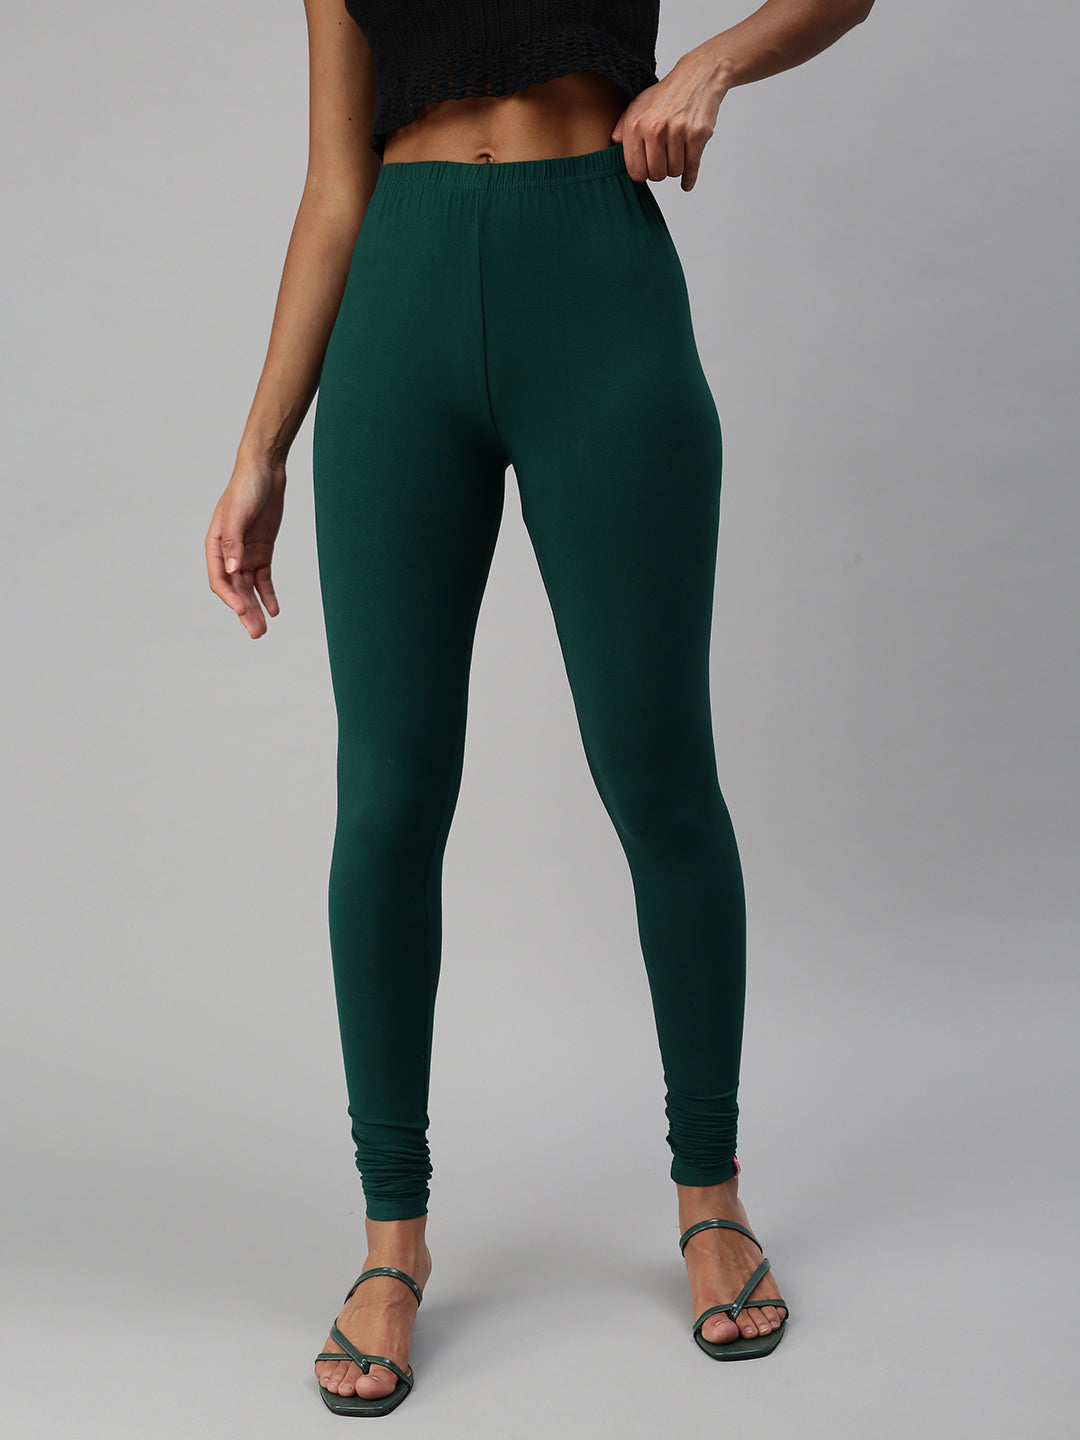 Spyder Active Pants Women's Green Leggings Moisture Wicking Size L | eBay